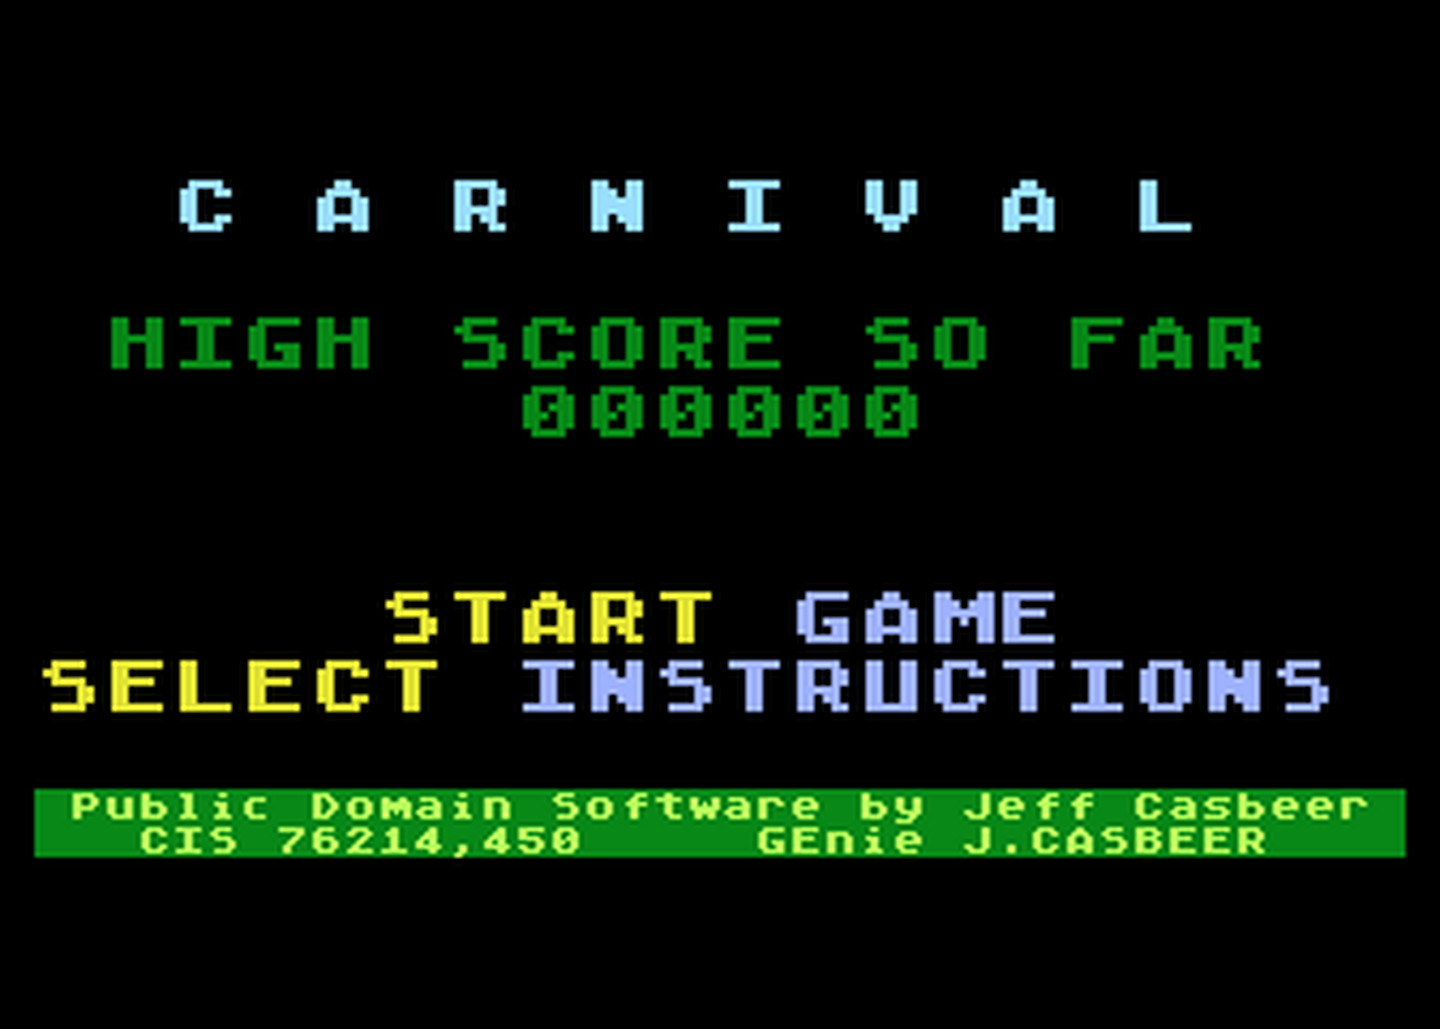 Atari GameBase Carnival (No_Publisher)